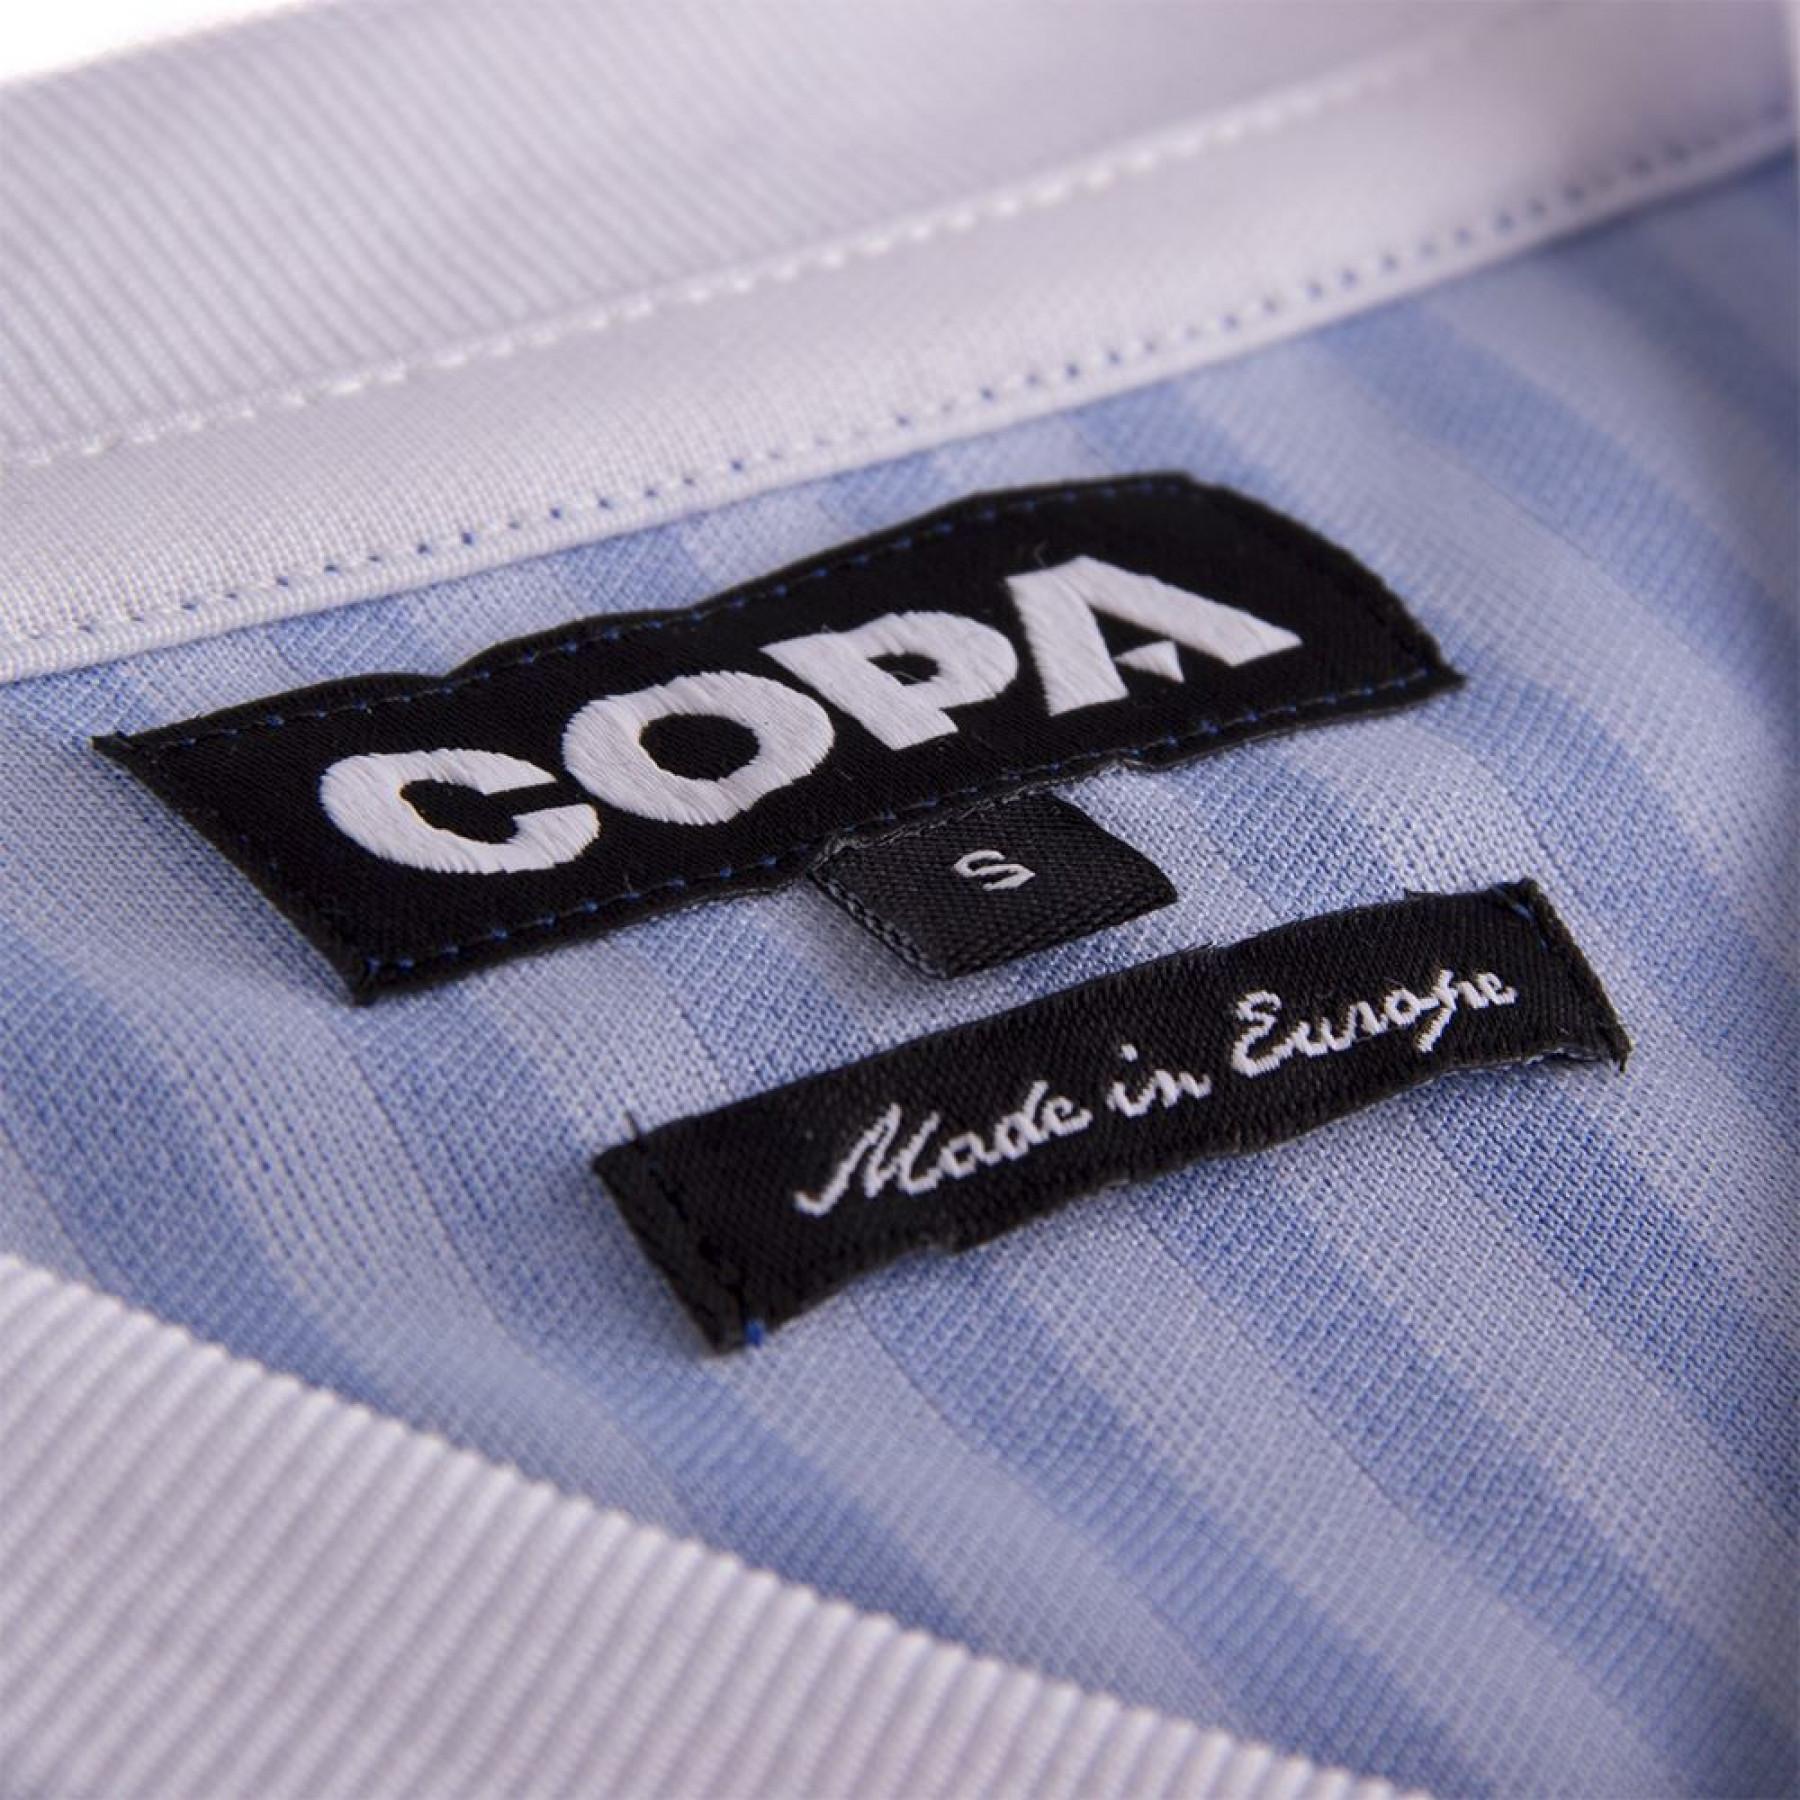 Koszulka Copa Yougoslavie 1990